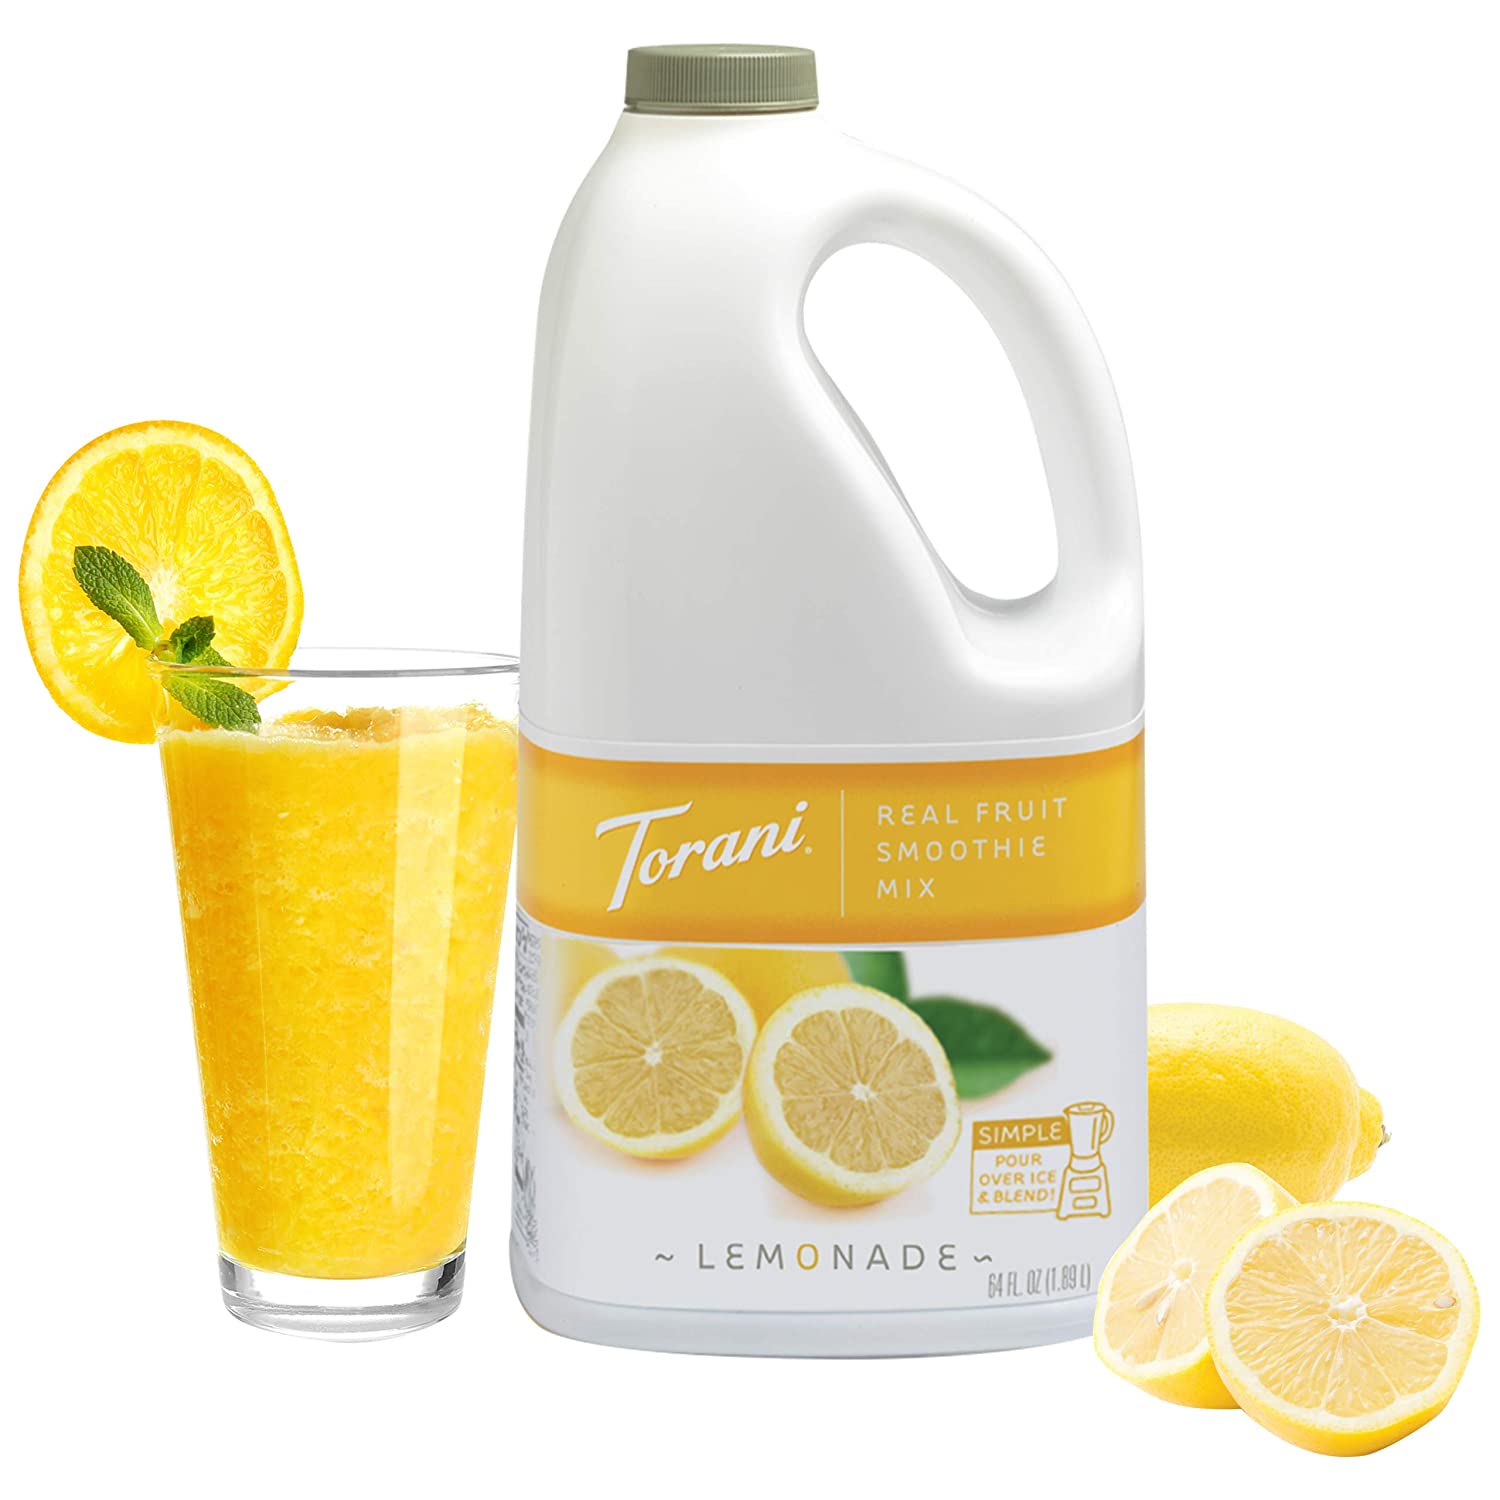 Torani Real Fruit Smoothies - 64 oz Jug: Lemonade